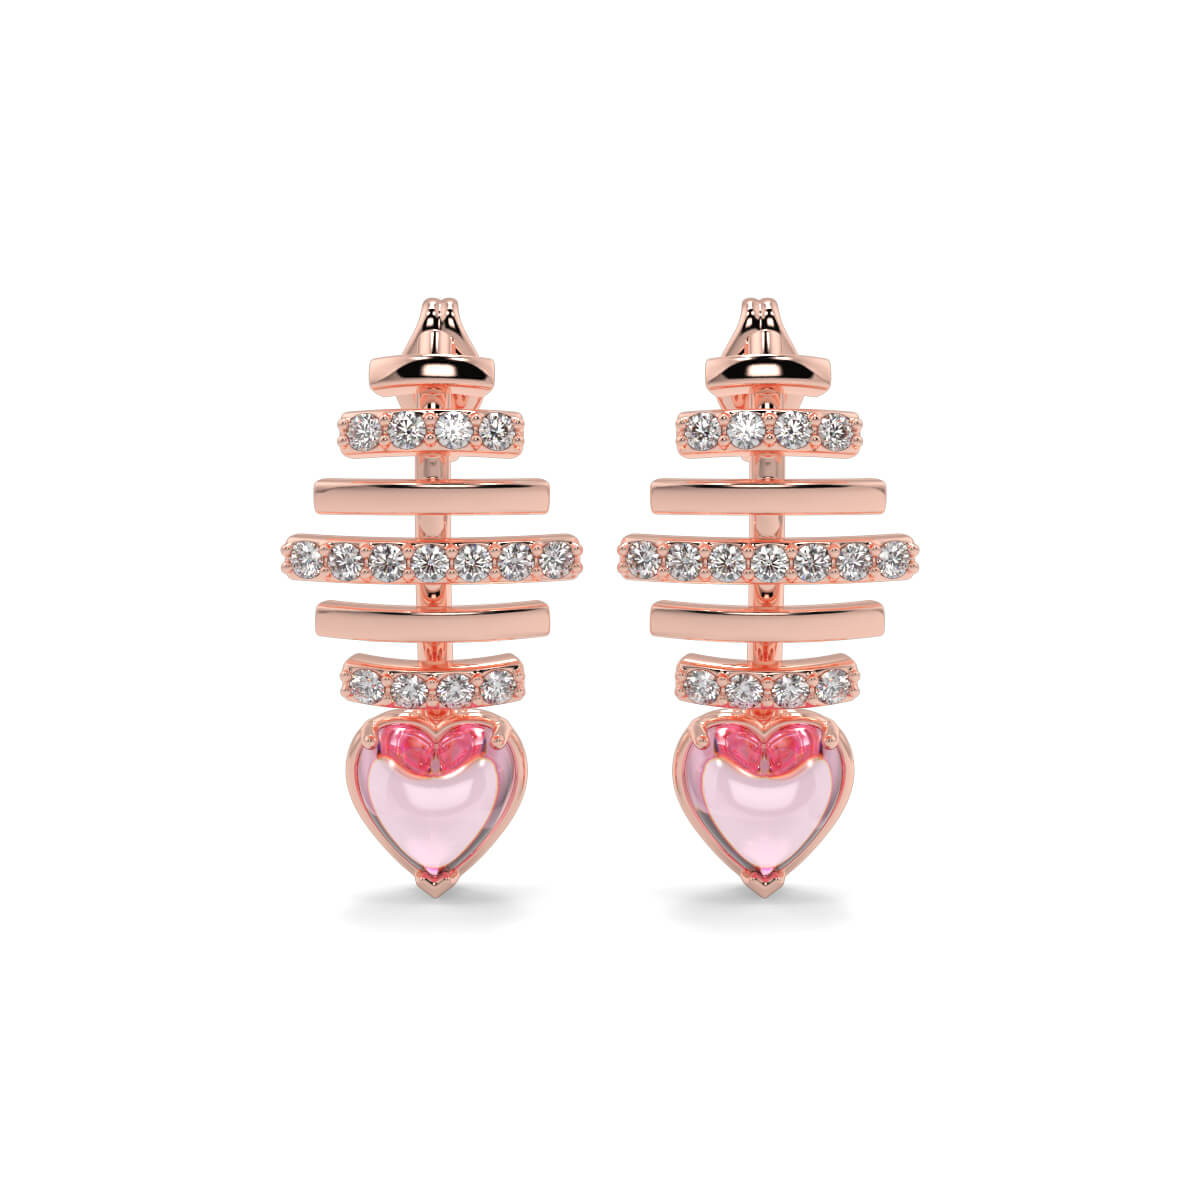 Benevolence Rose Quartz and Diamond Earrings 